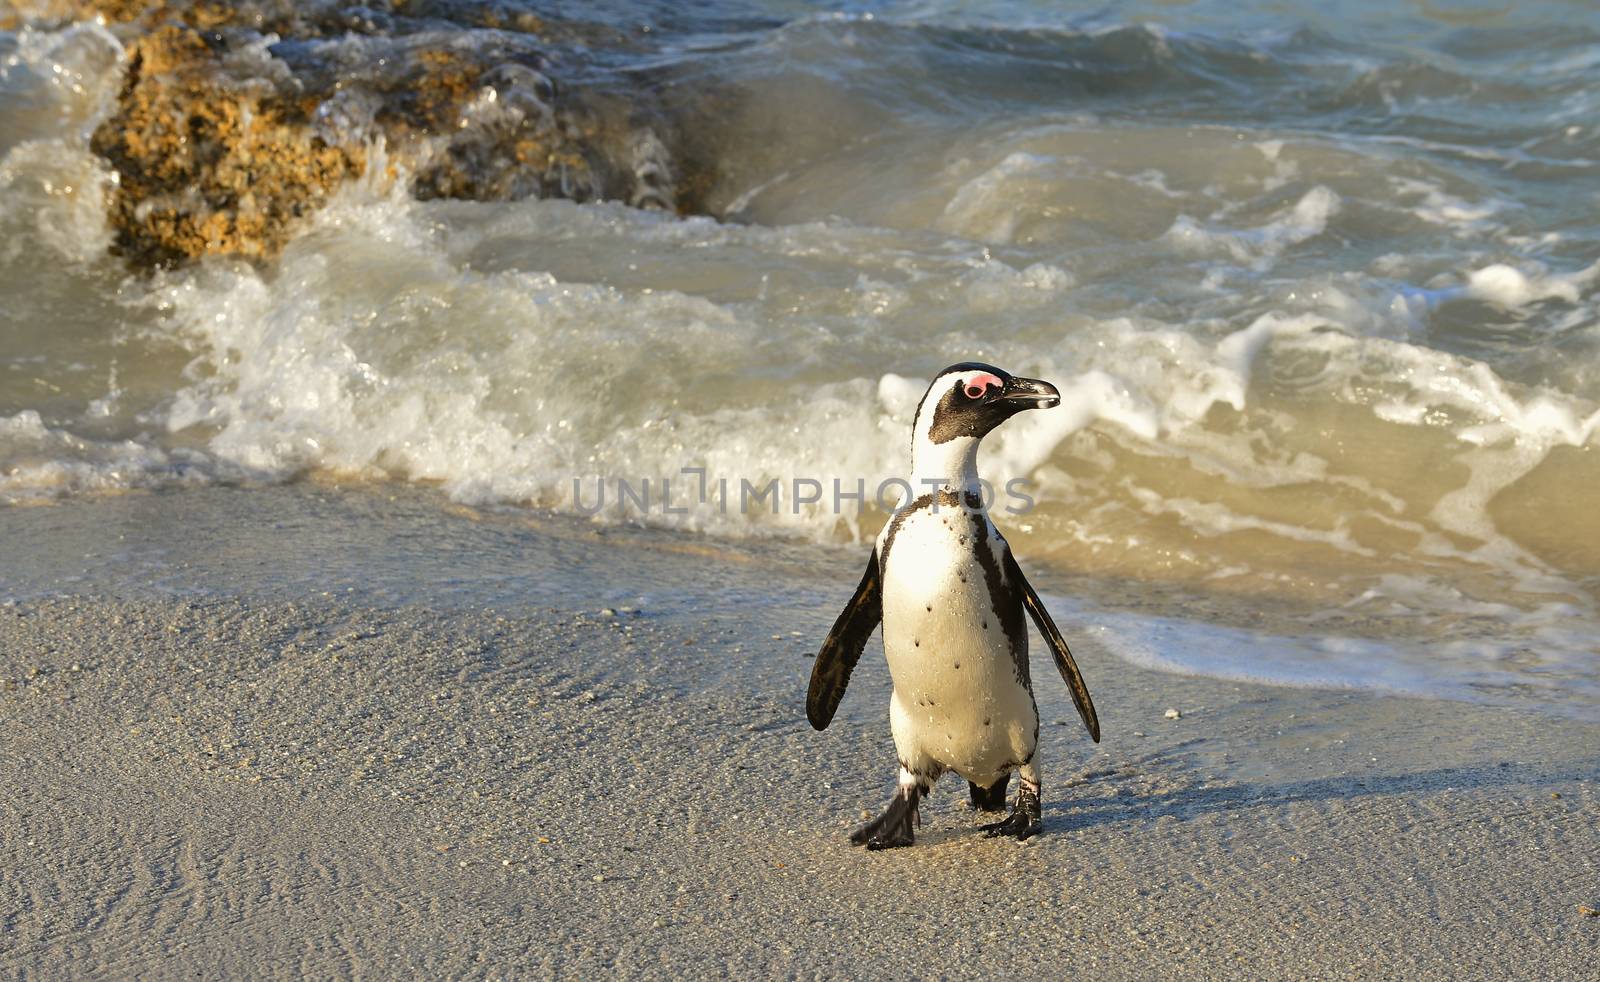  African penguin by SURZ